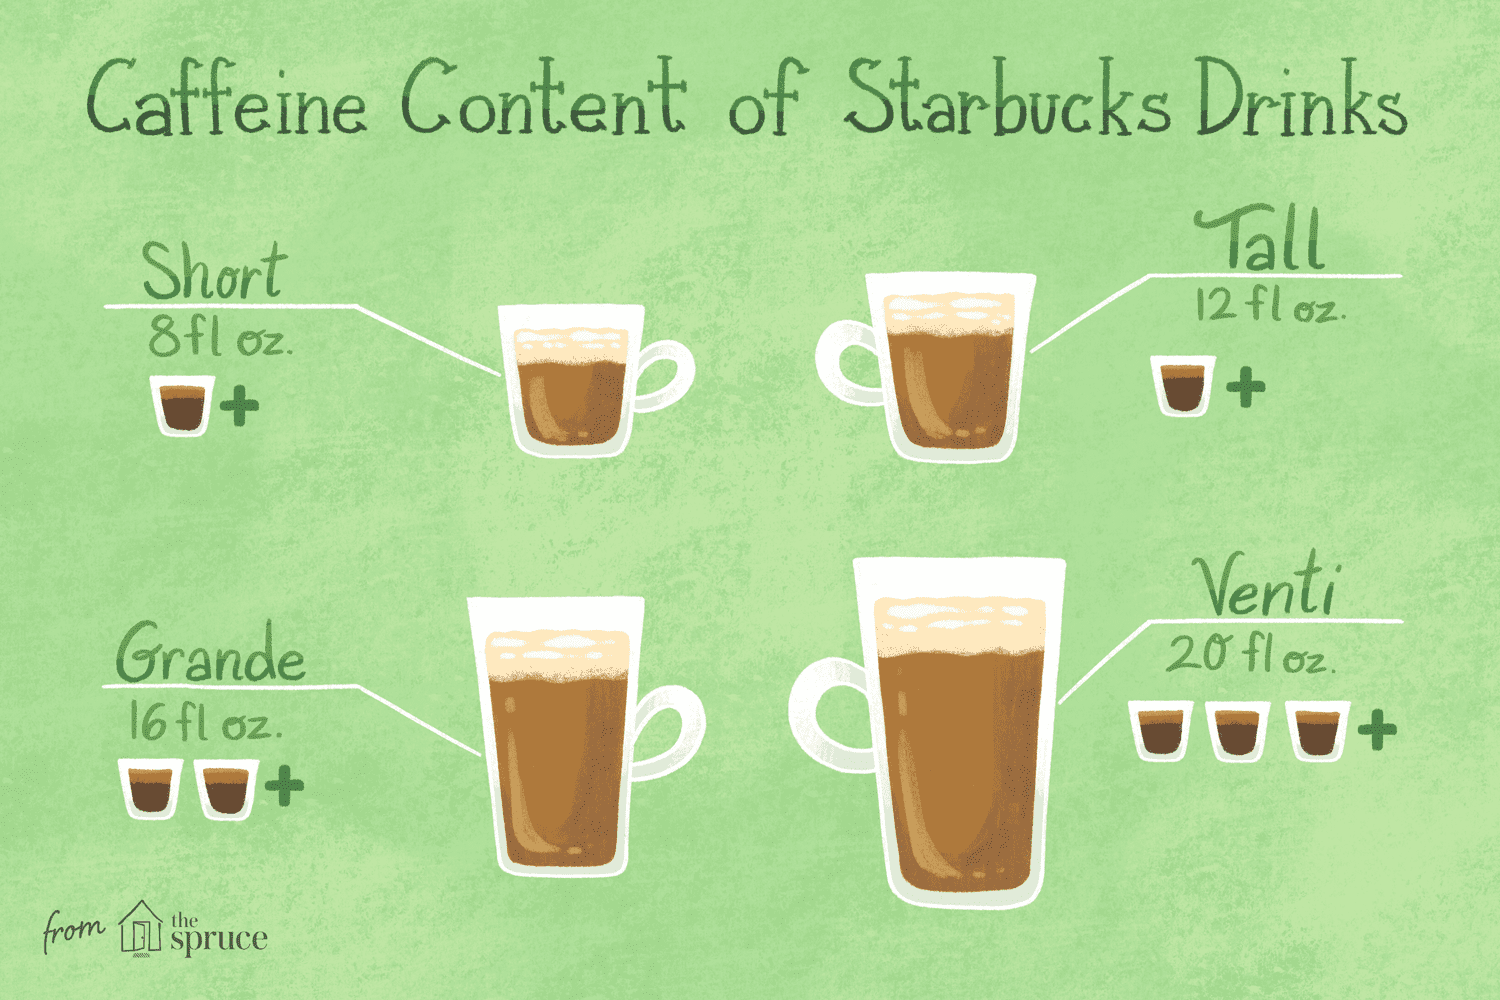 How Much Caffeine Is in Starbucks Coffee Drinks?